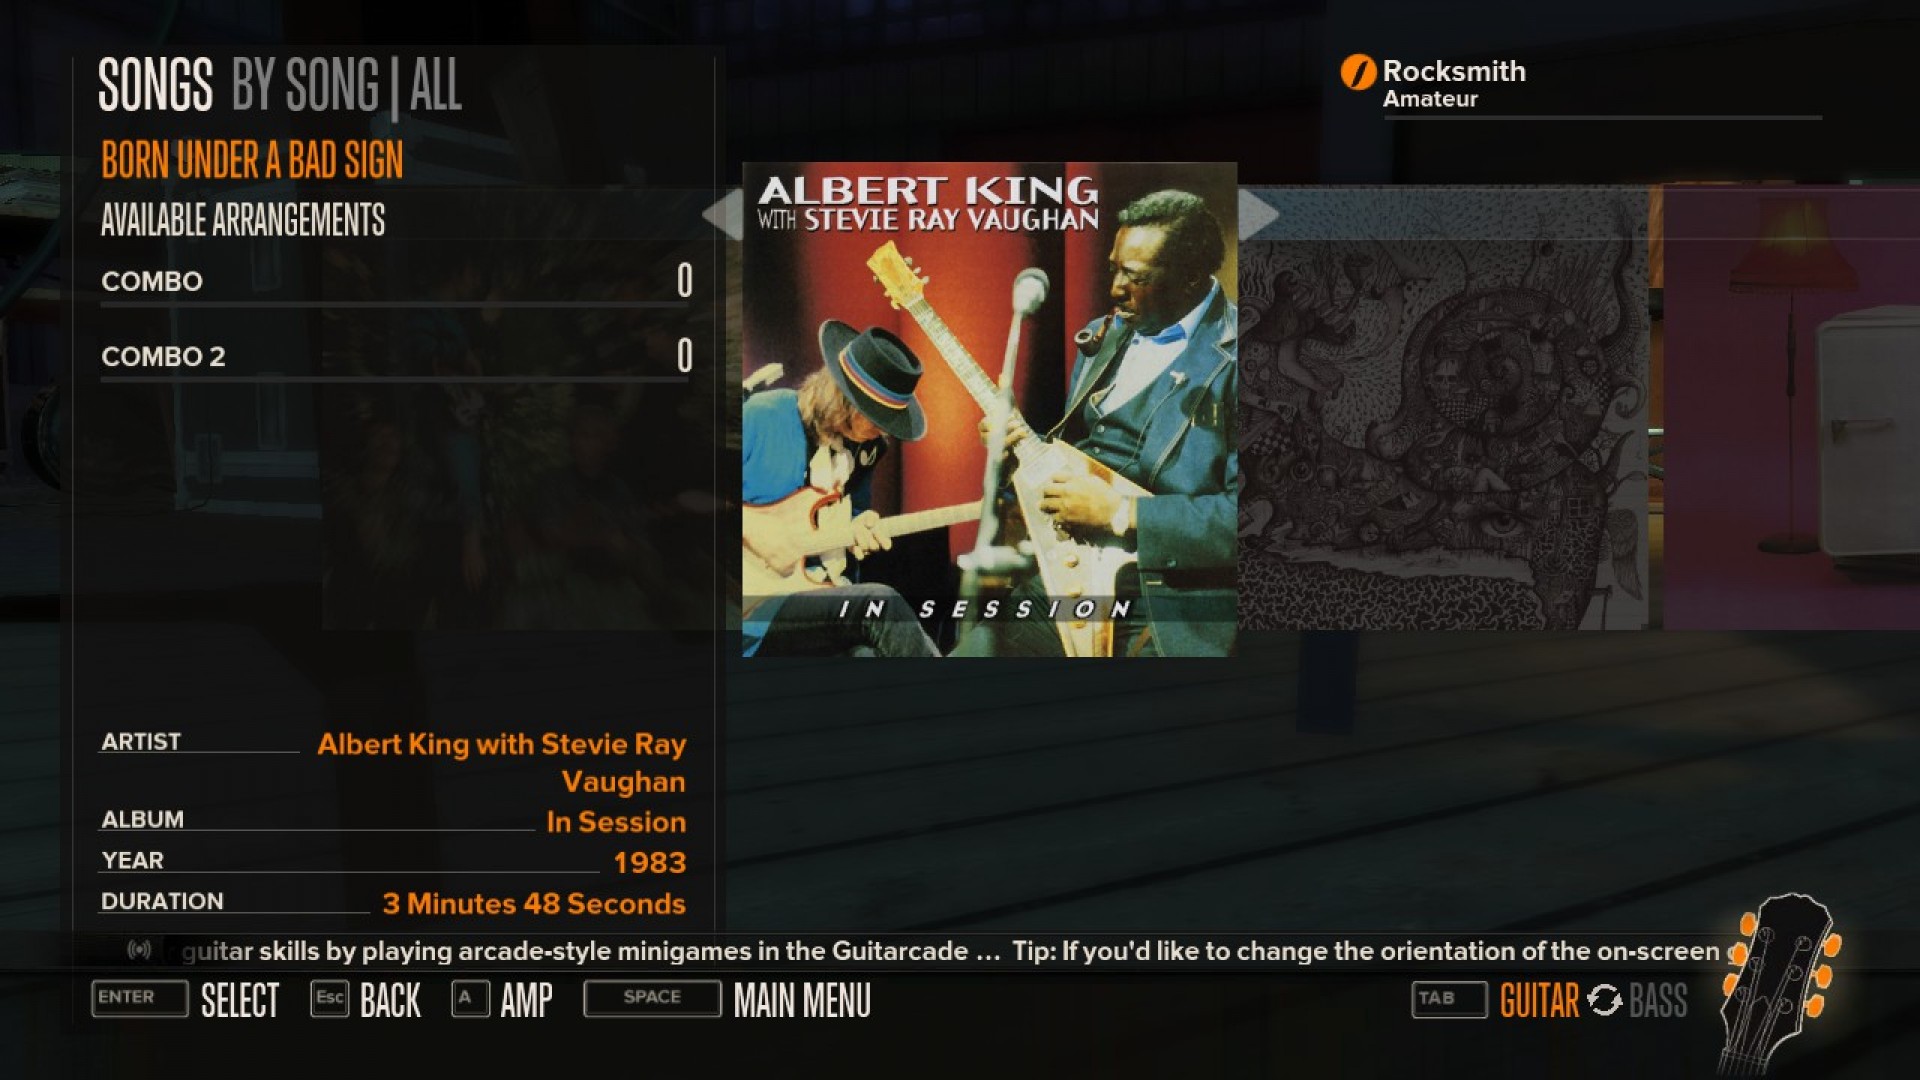 Rocksmith - Albert King with Stevie Ray Vaughan - Born Under a Bad Sign screenshot